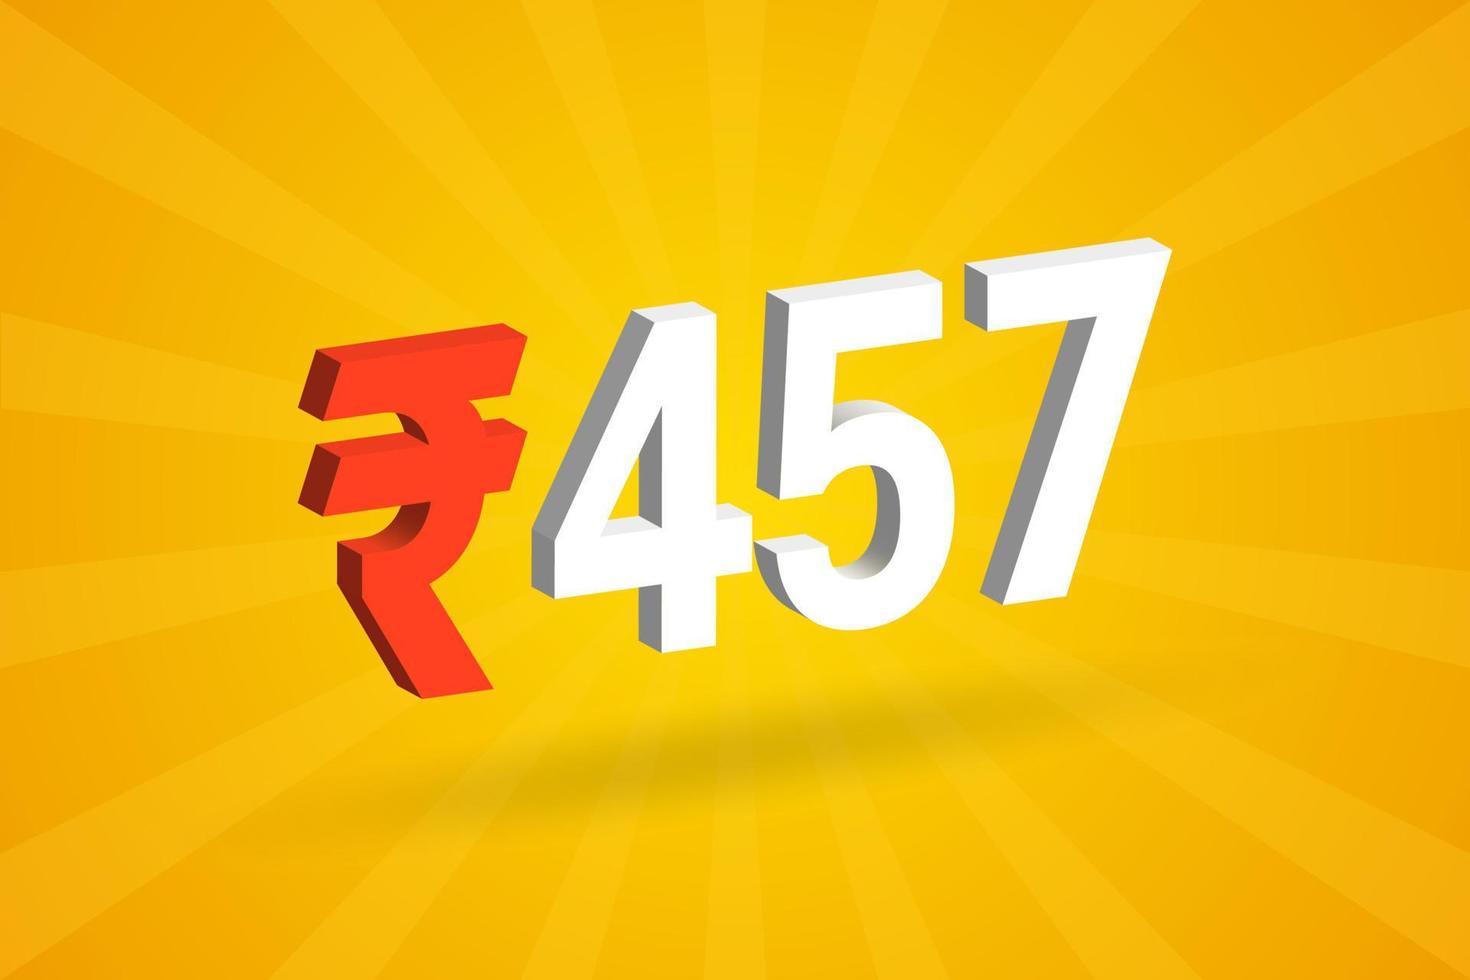 457 rupias símbolo 3d imagen vectorial de texto en negrita. 3d 457 rupia india signo de moneda ilustración vectorial vector